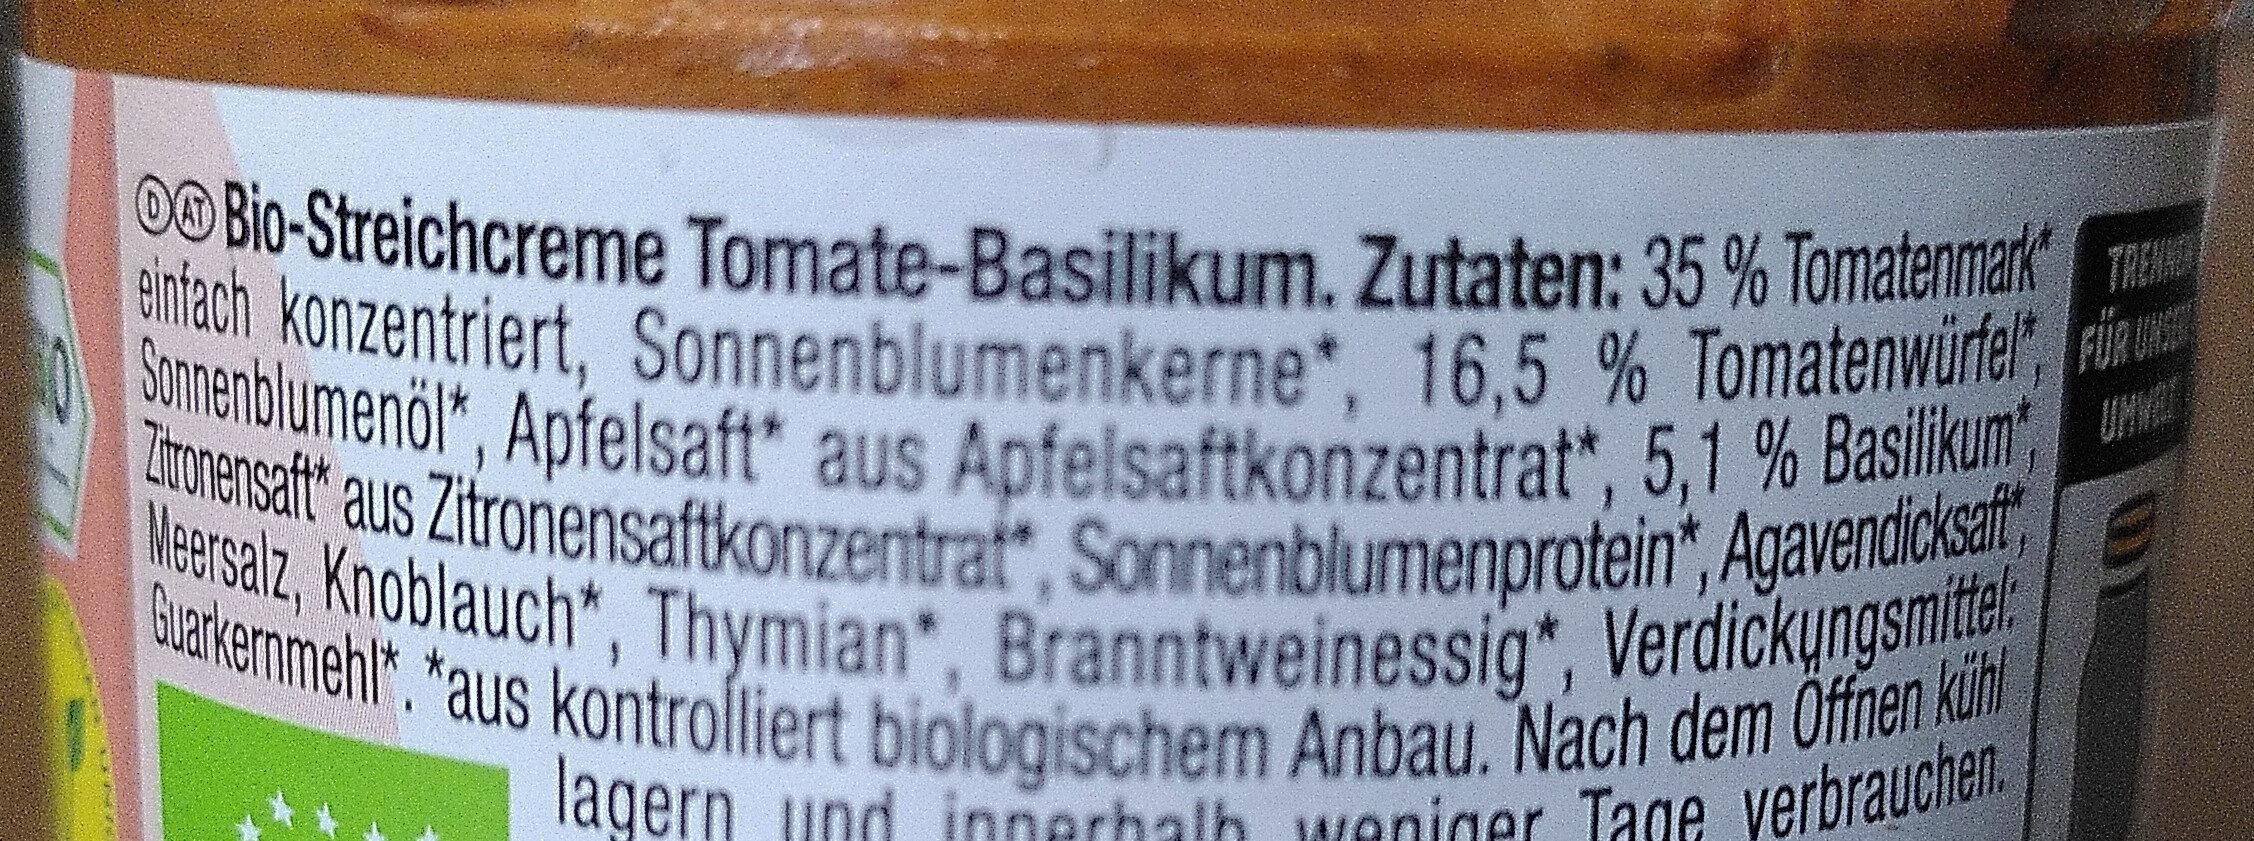 Bio-Streichcreme Tomate-Basilikum - Zutaten